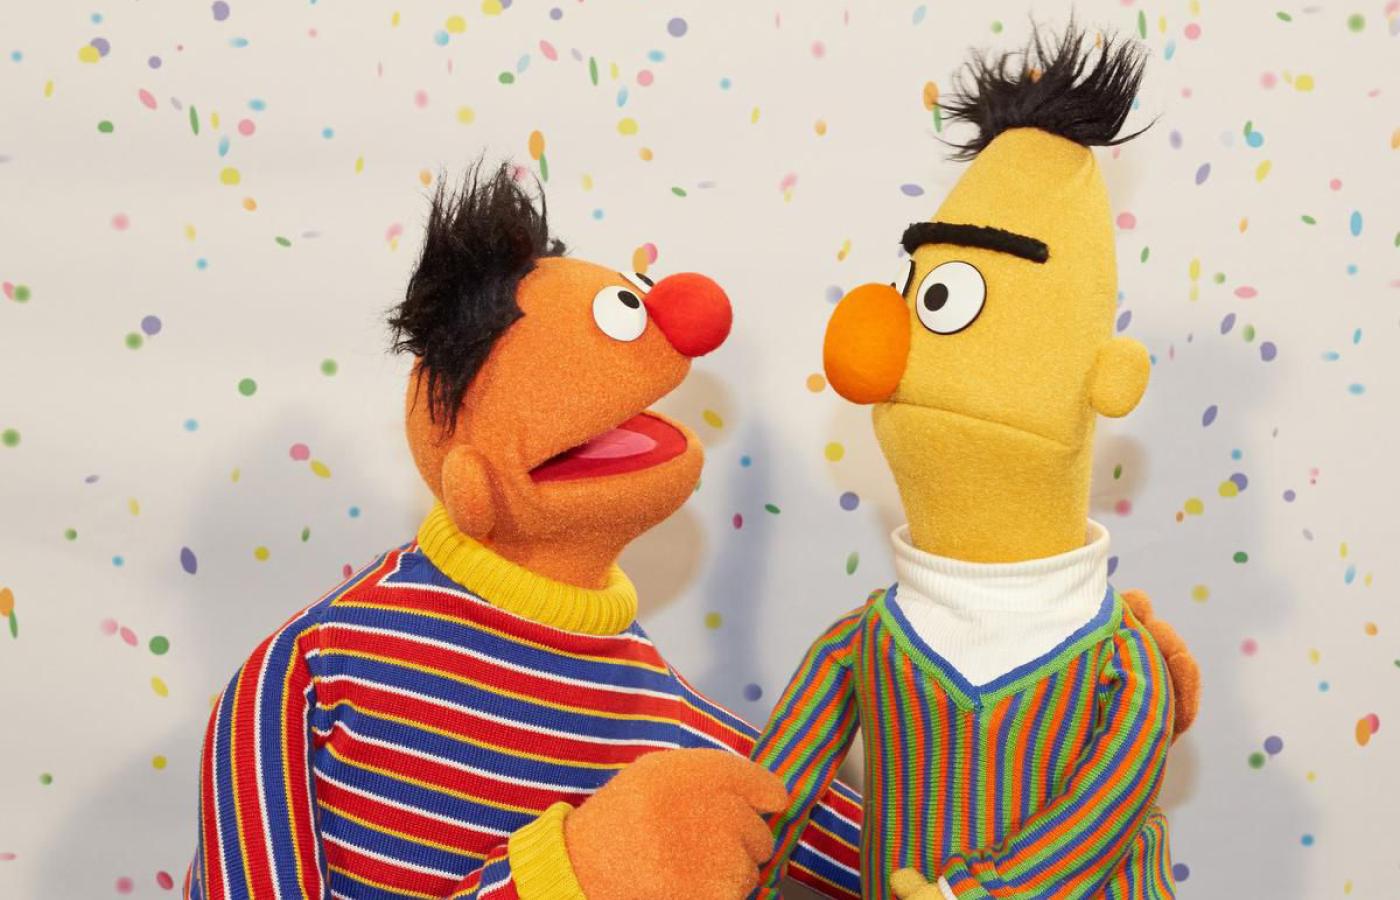 Bert i Ernie